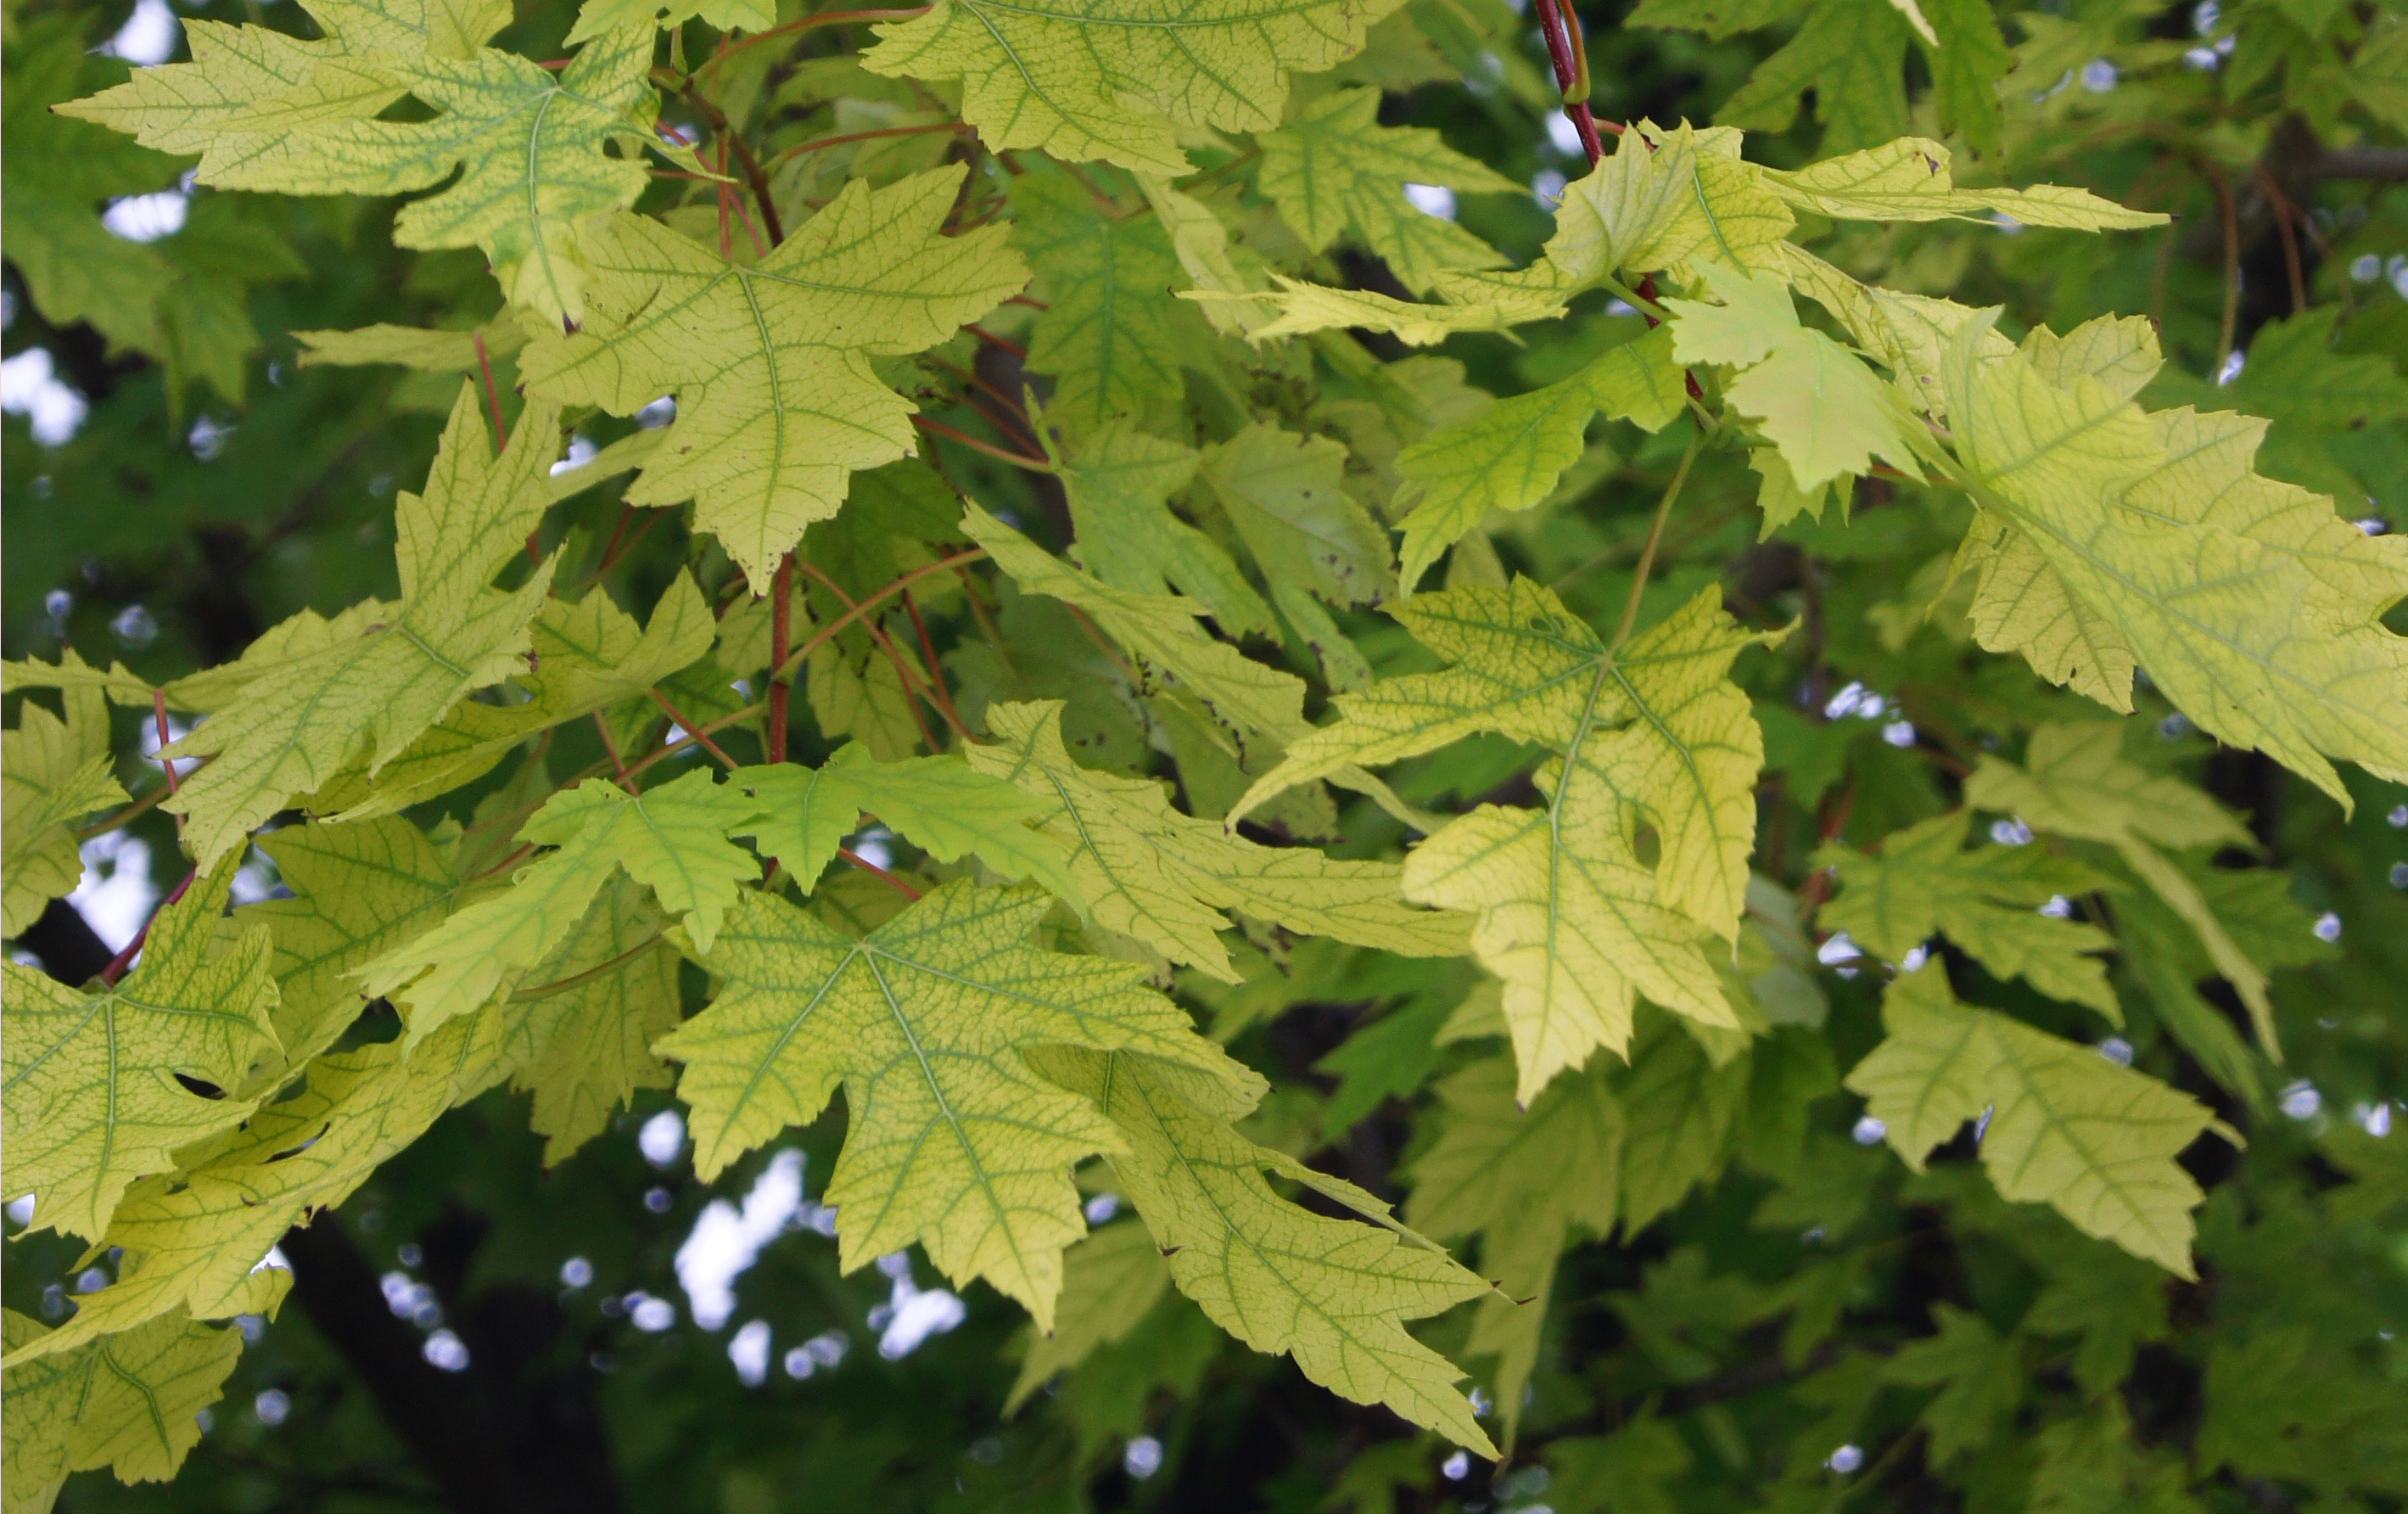 Autumn Blaze maple, iron chlorosis, close-up of leaf, NDSU campus